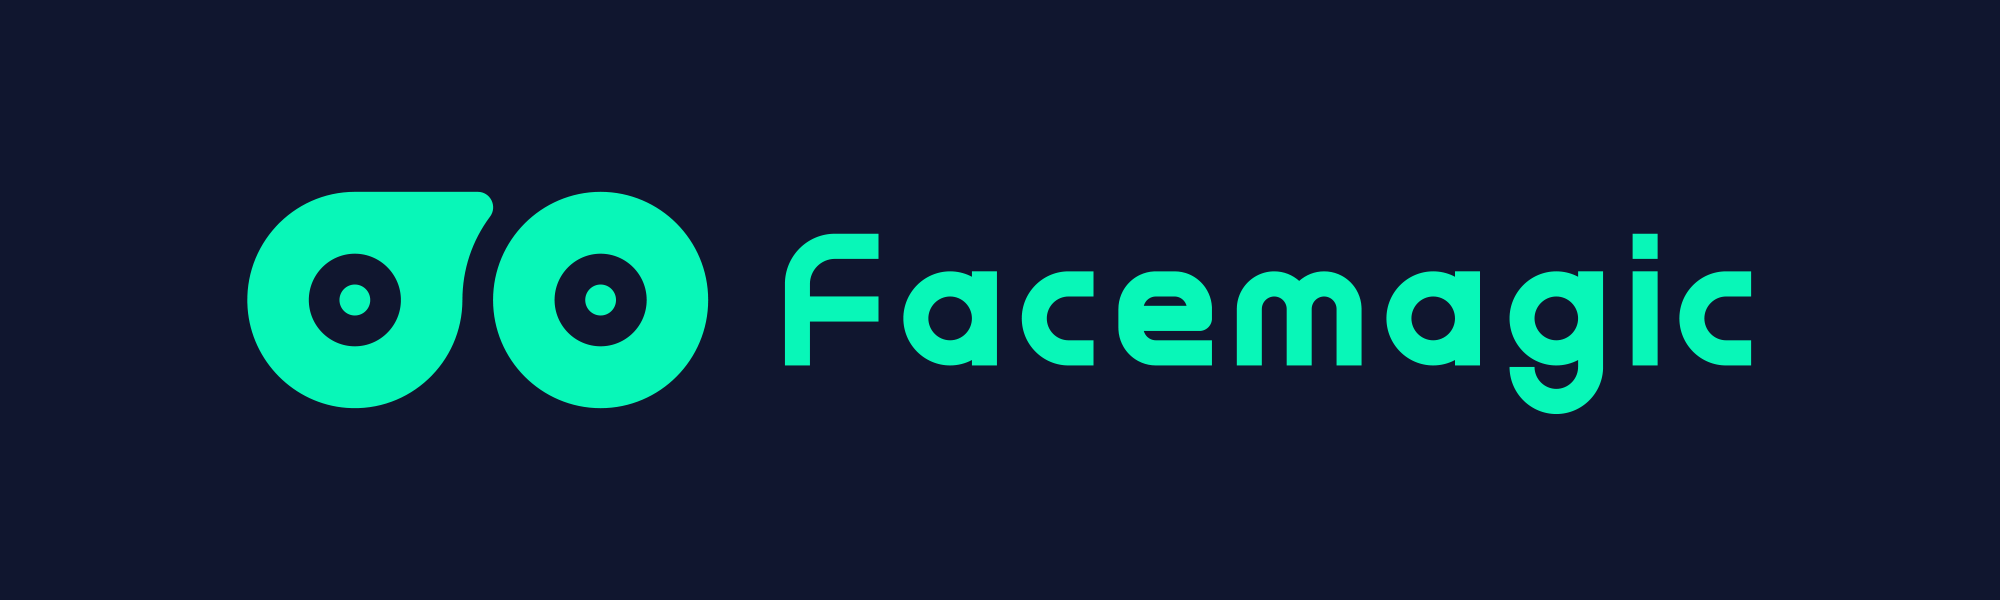 Facemagic: Bringing Faces to Life